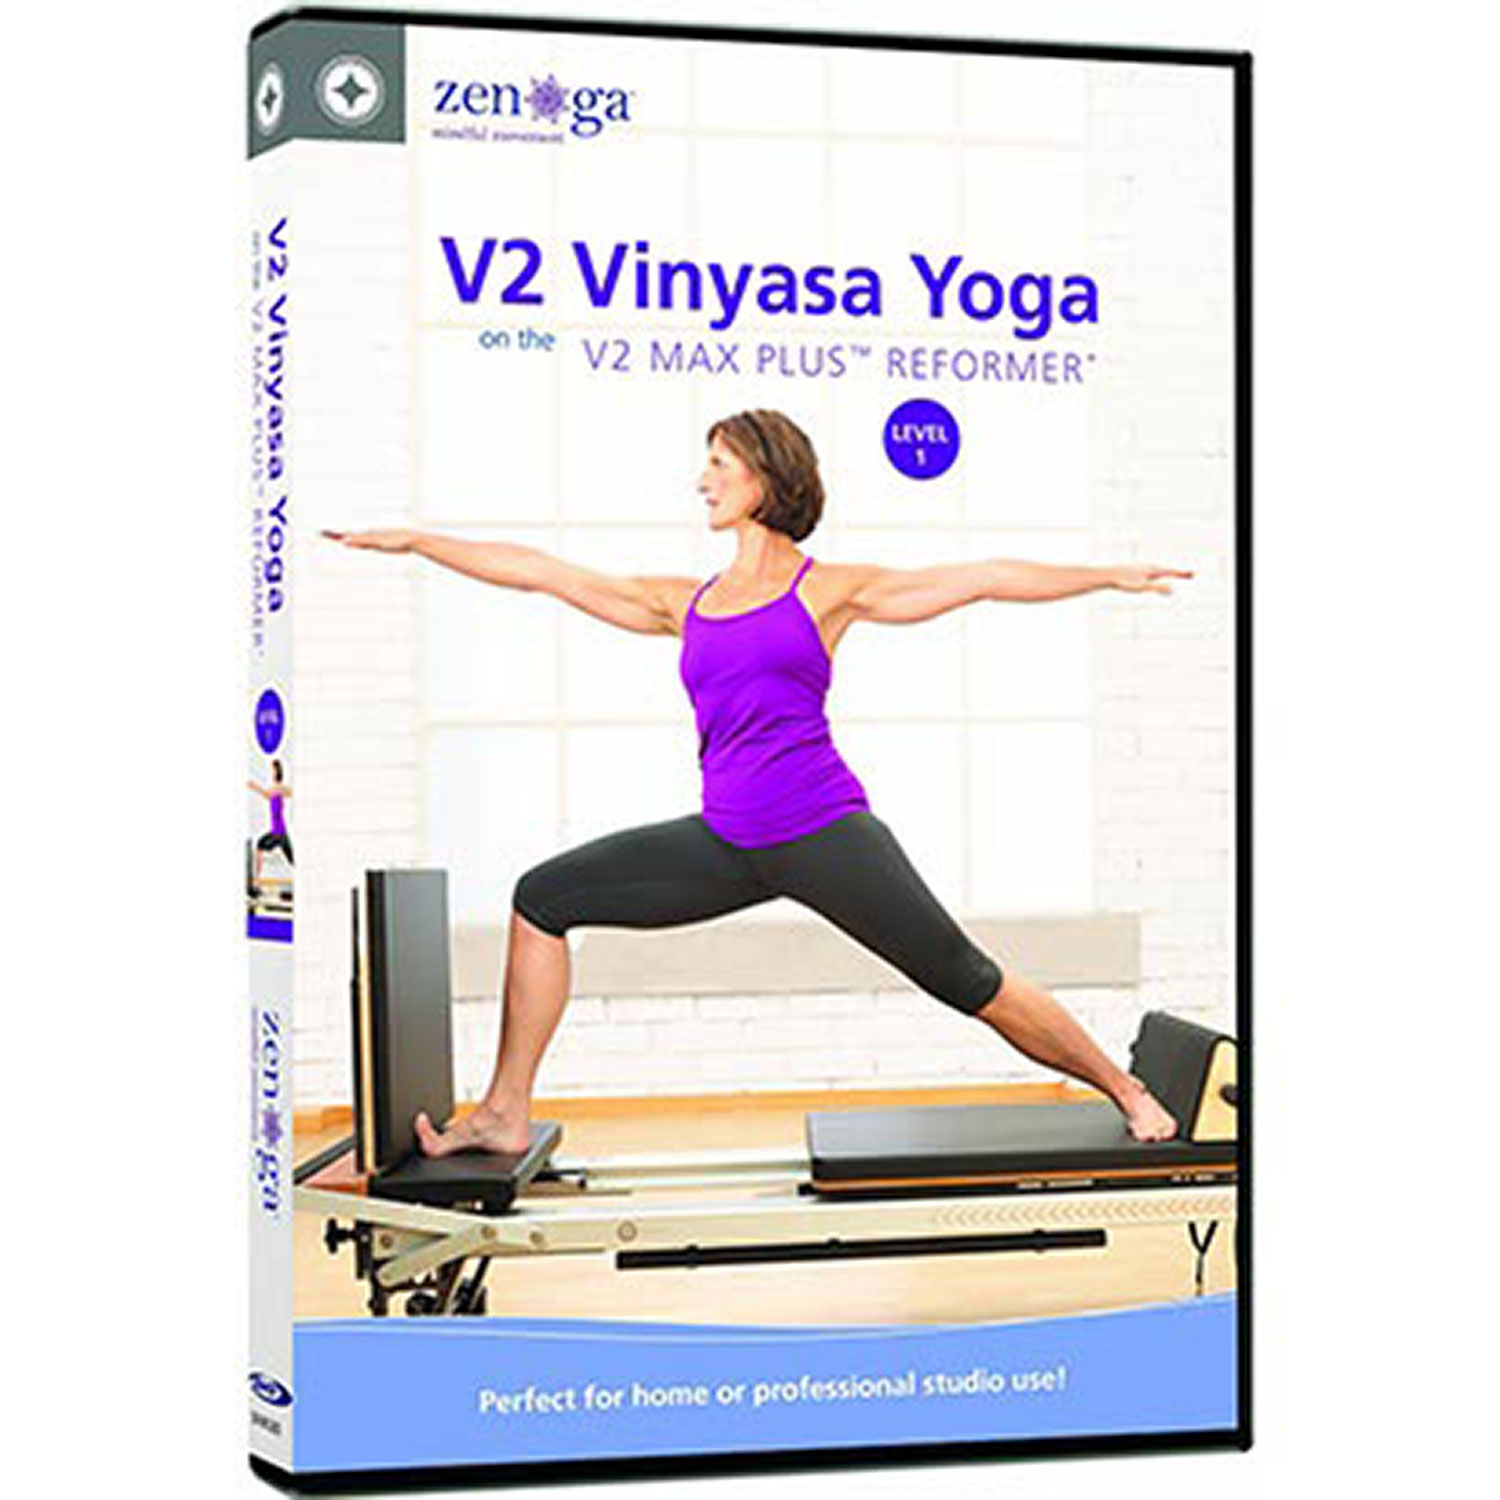 V2 Vinyasa Yoga